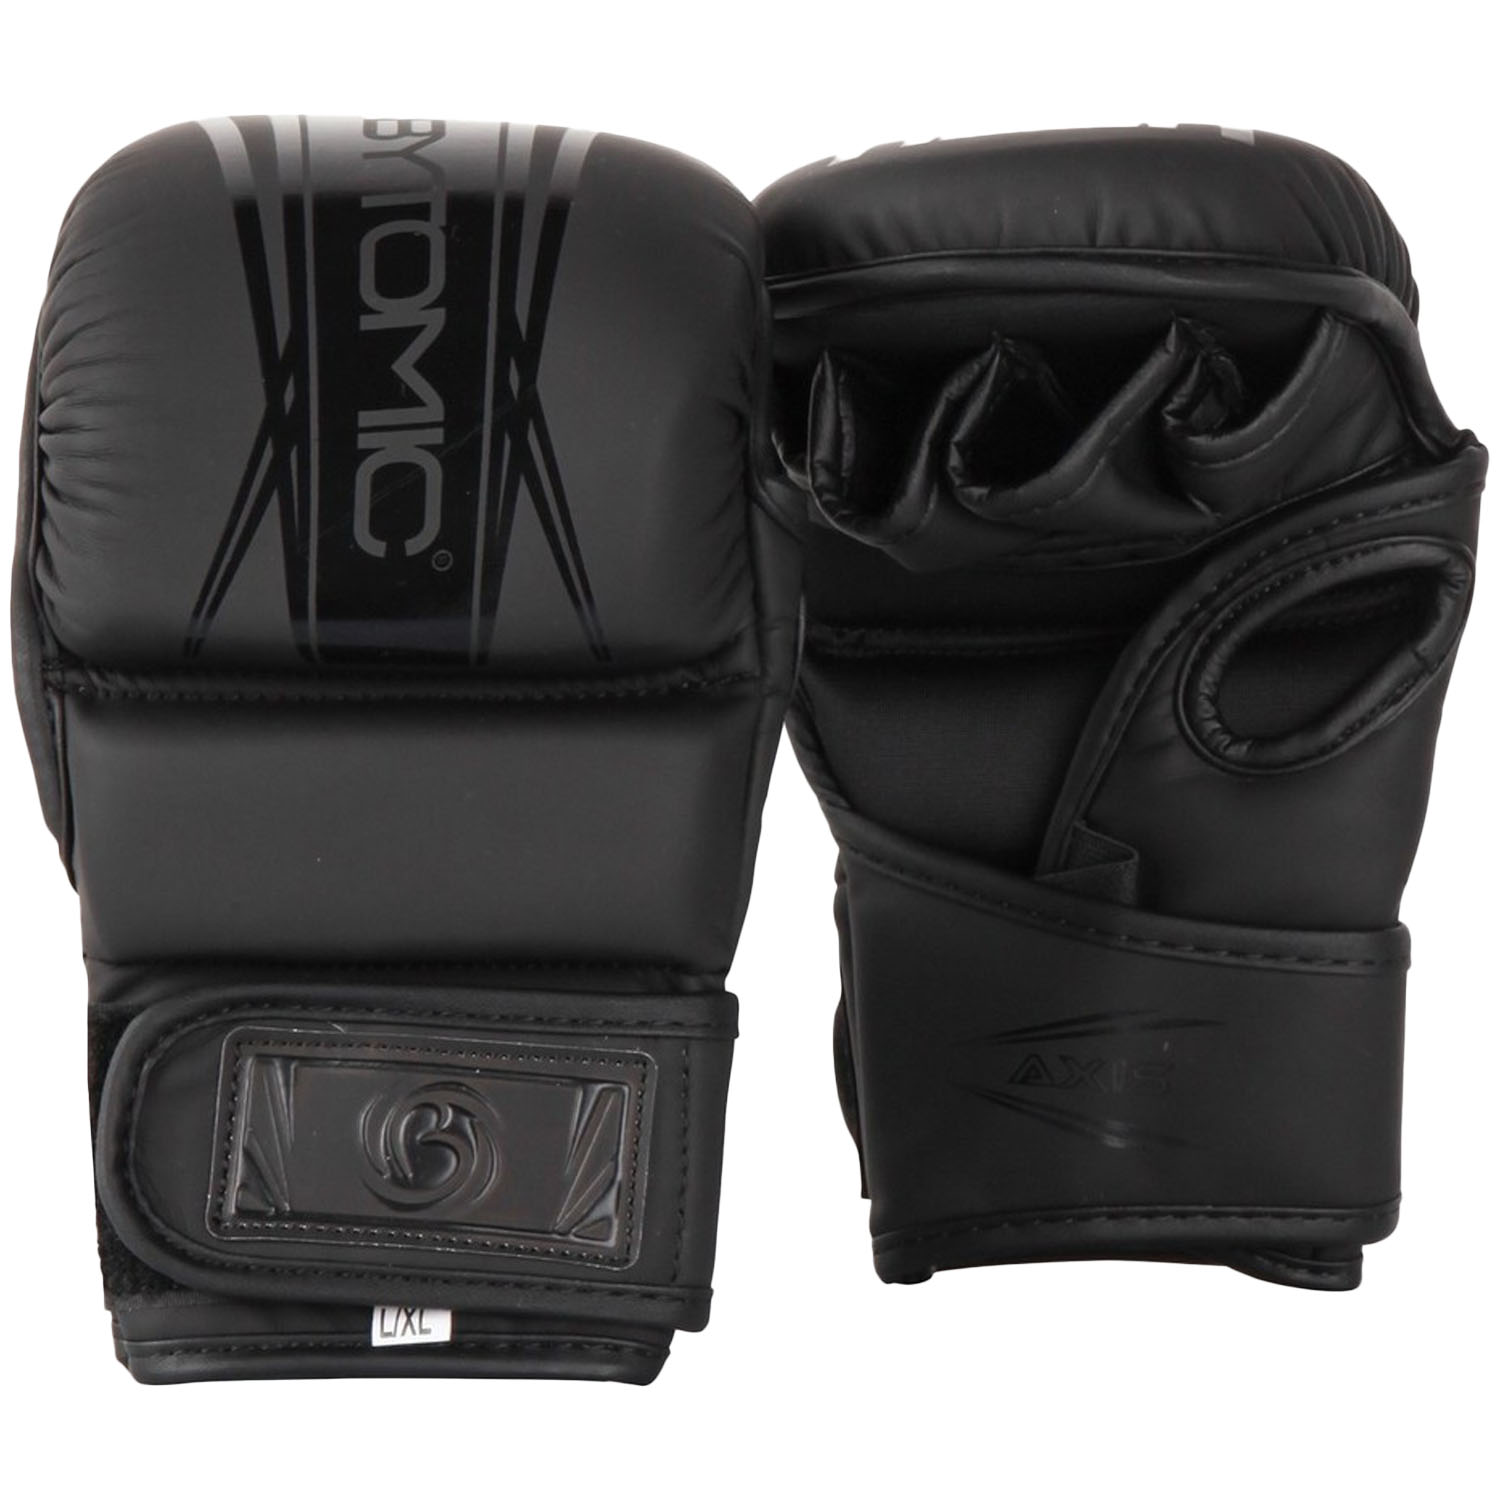 Bytomic MMA Sparring Boxing Gloves, Axis V2, black-black, L/XL